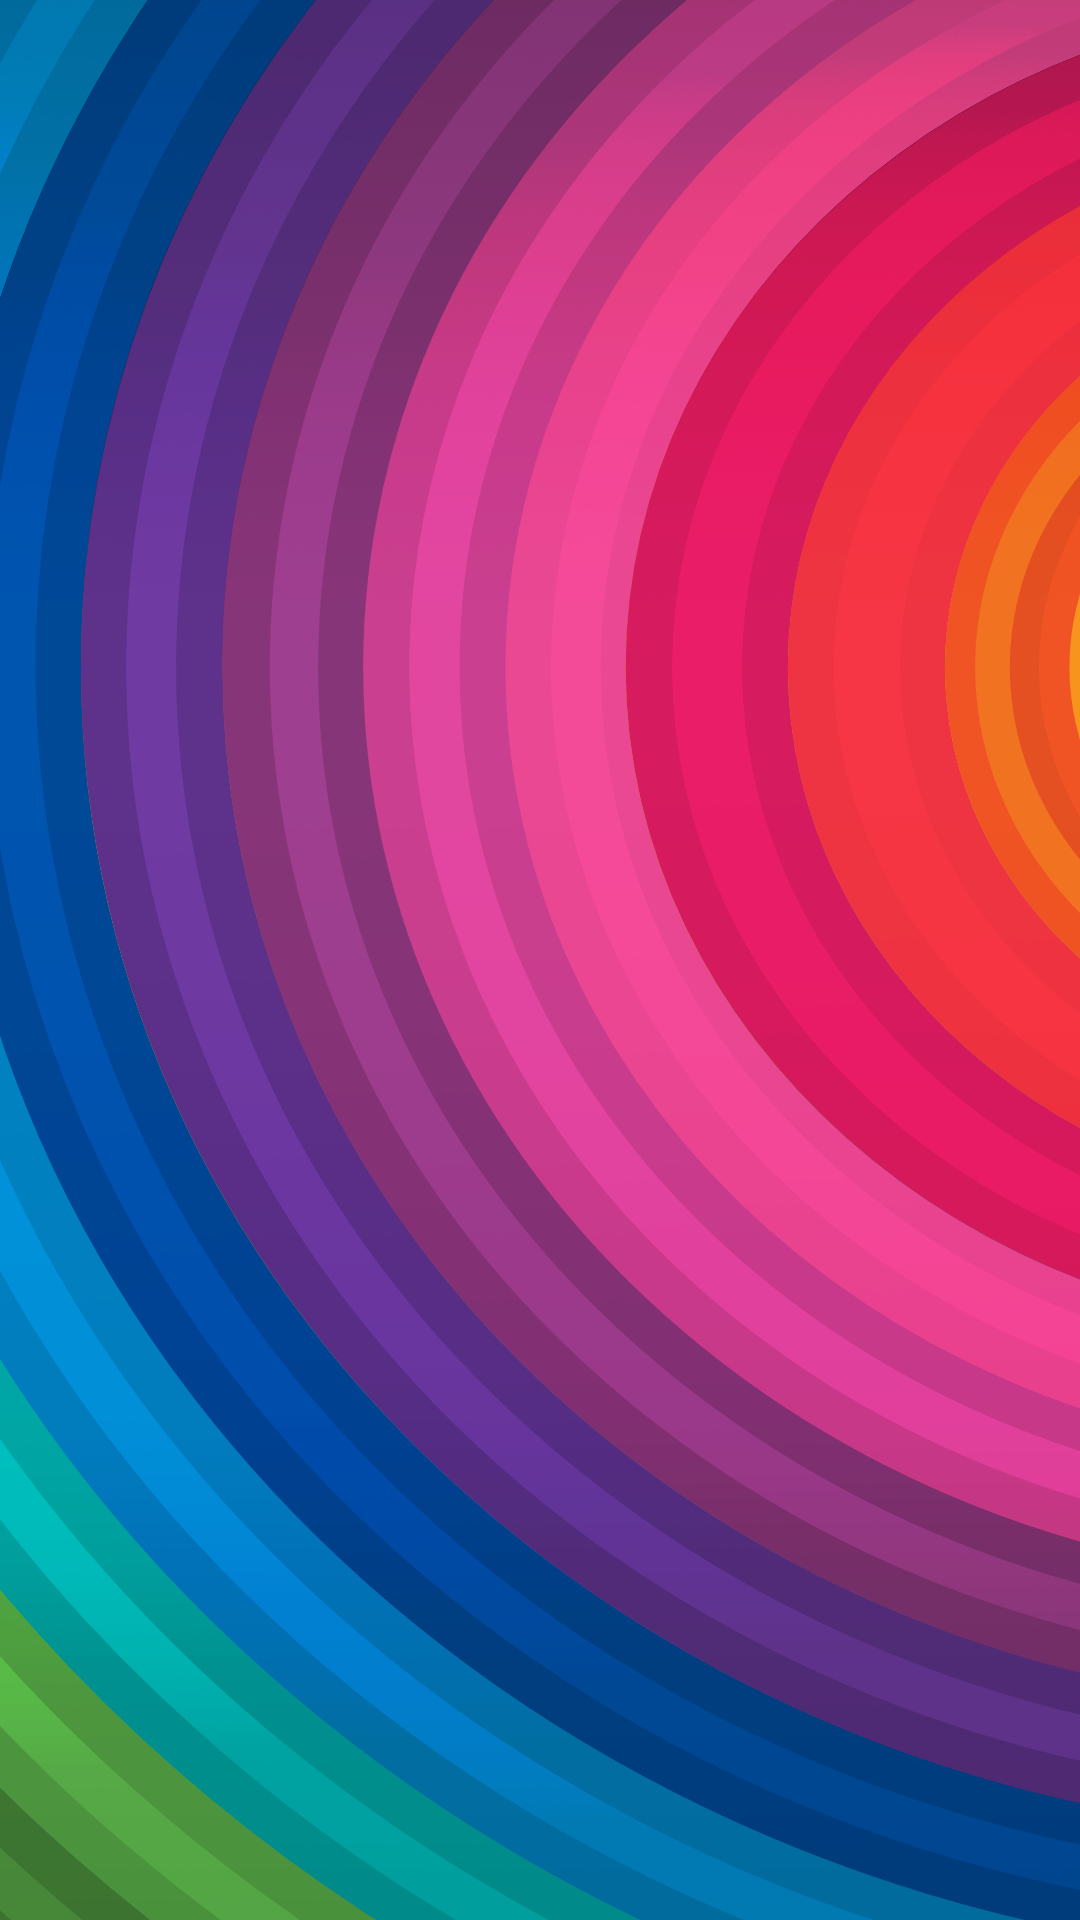 Rainbow Circles Background